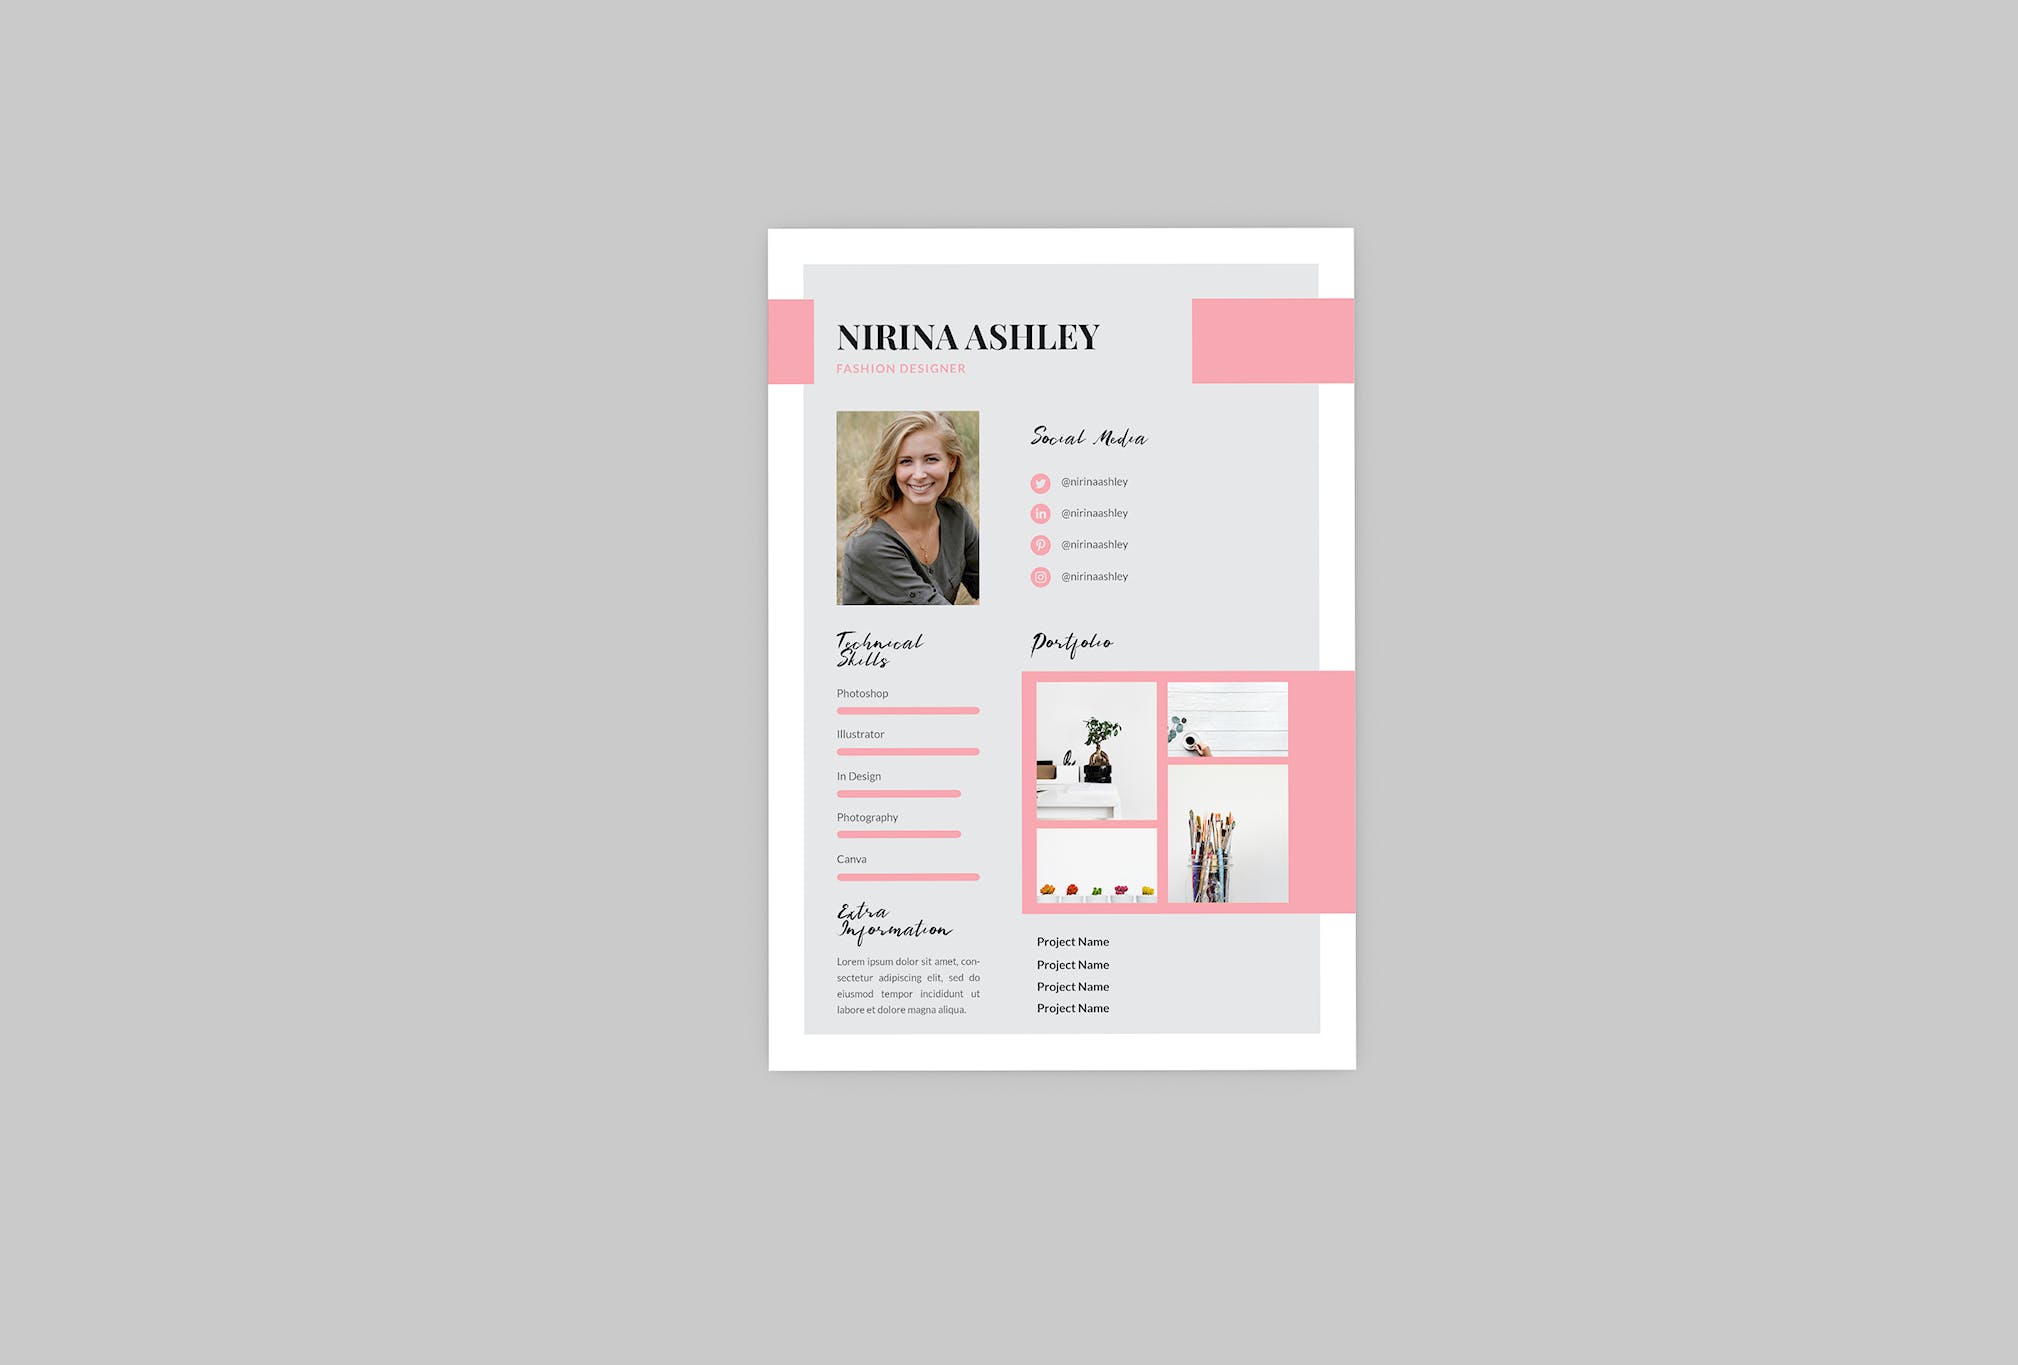 时尚编辑介绍信&素材库精选简历模板 Nirina Fashion Resume Designer插图(3)